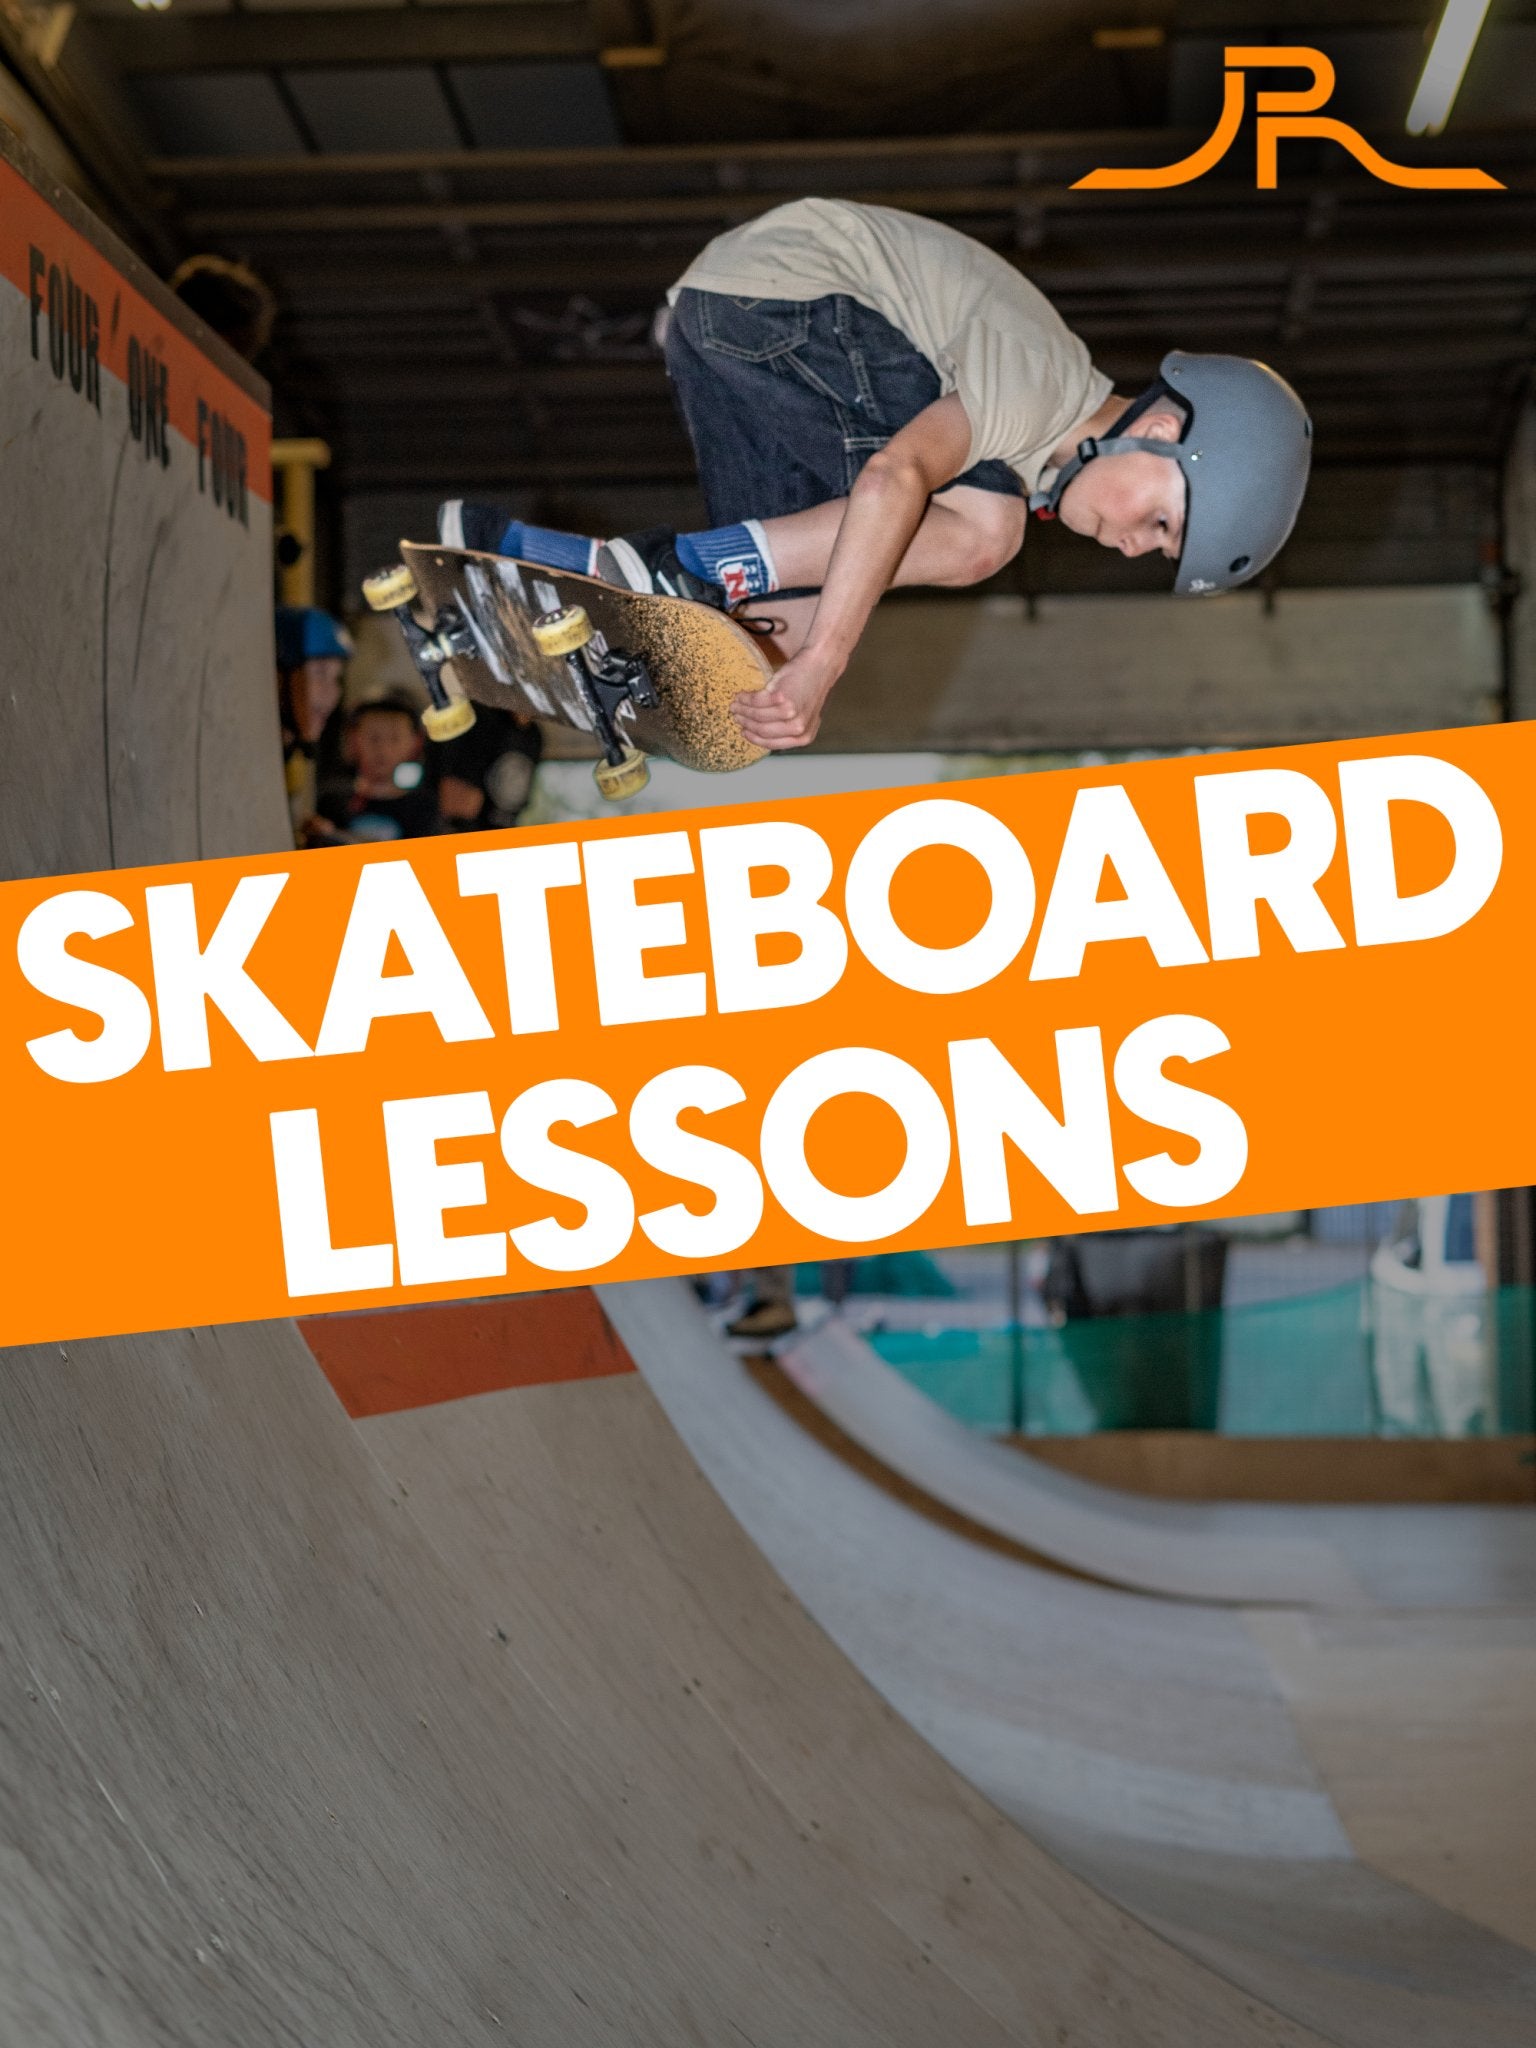 Skateboard Lessons at Just Ramps Indoor Skatepark - Just Ramps Skatepark